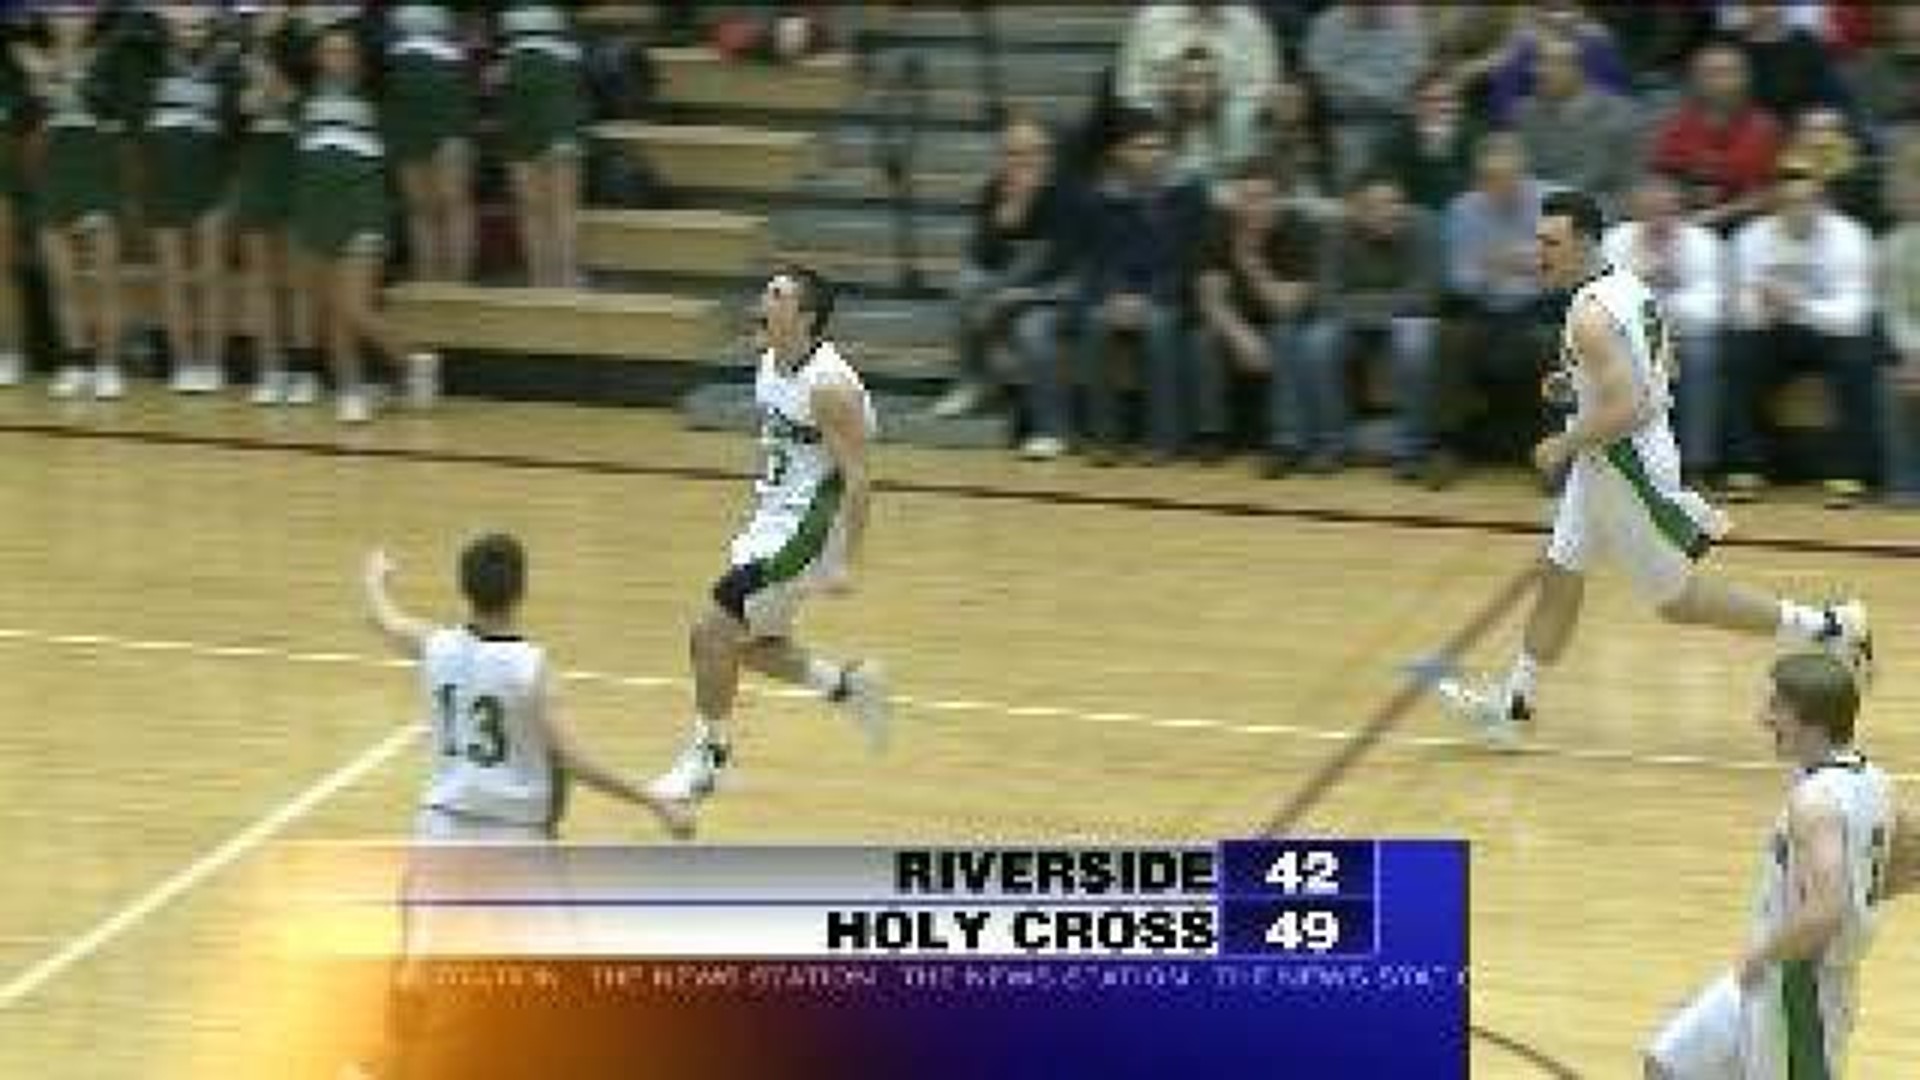 Holy Cross beats Riverside